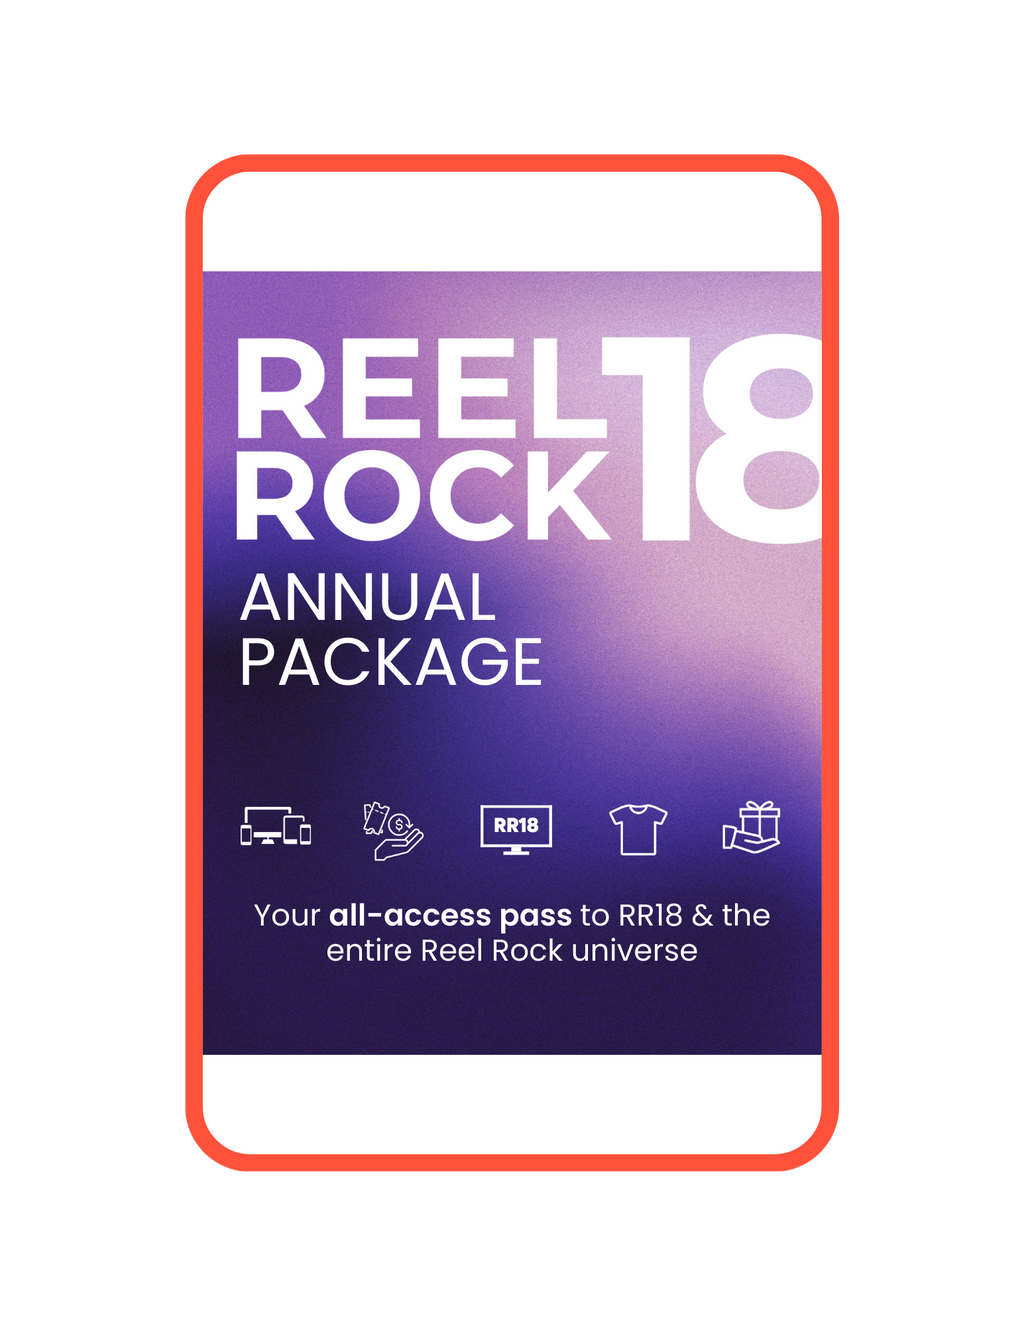 About RR15 – REEL ROCK